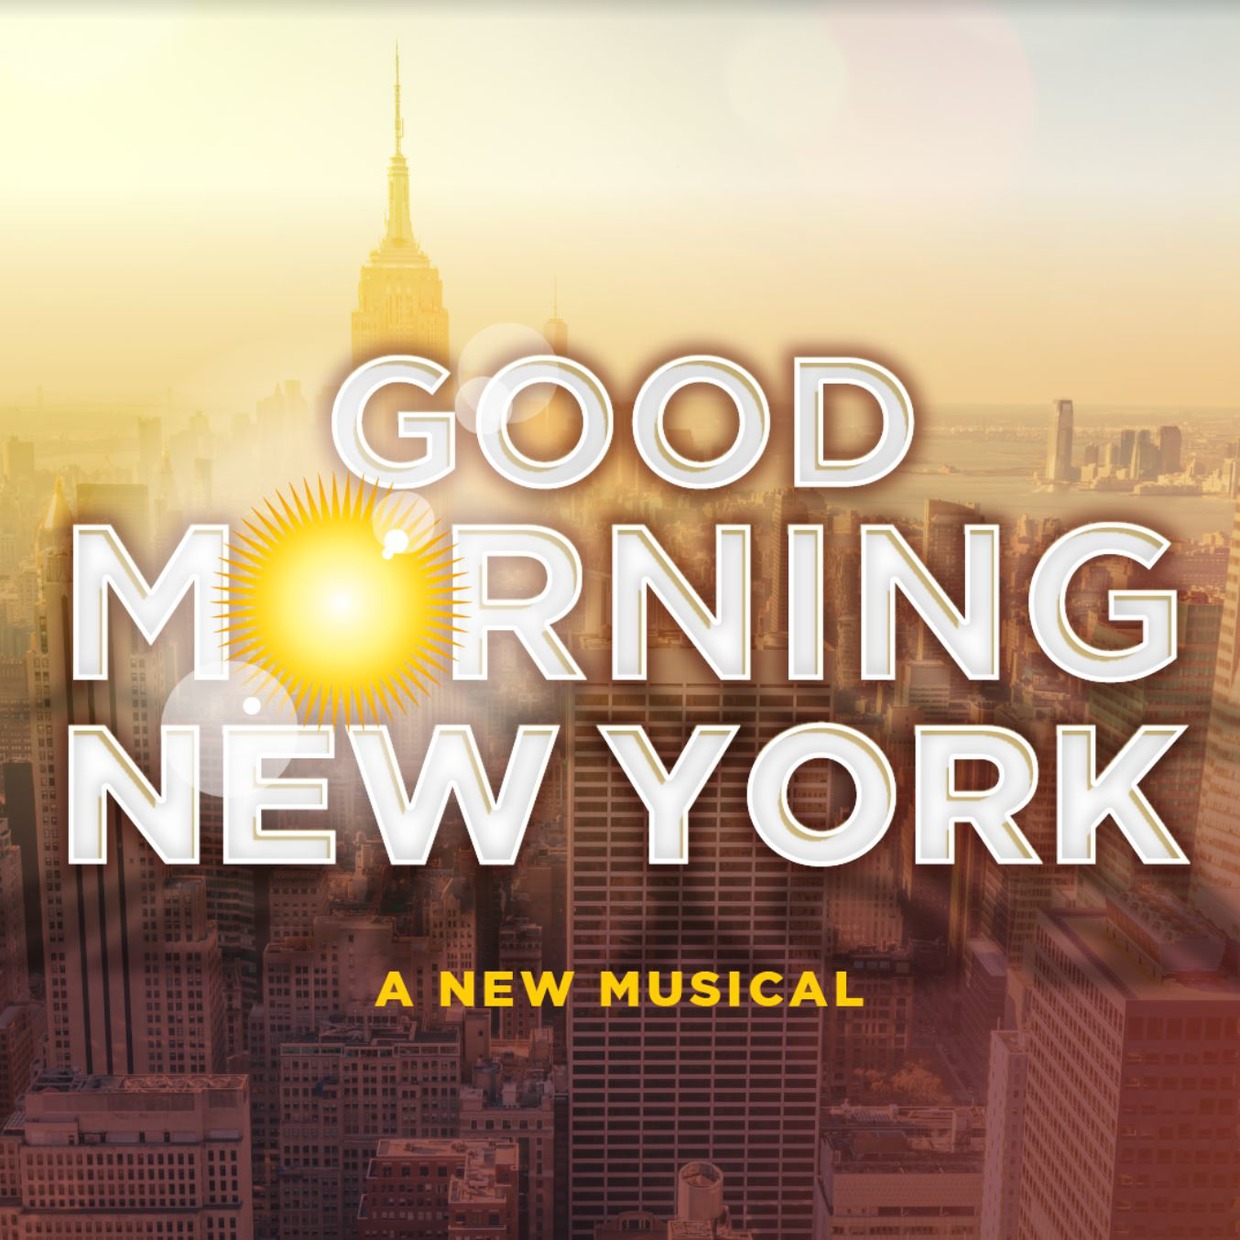 A Bushwick Church Turns Into a Recording Studio for “Good Morning New York”